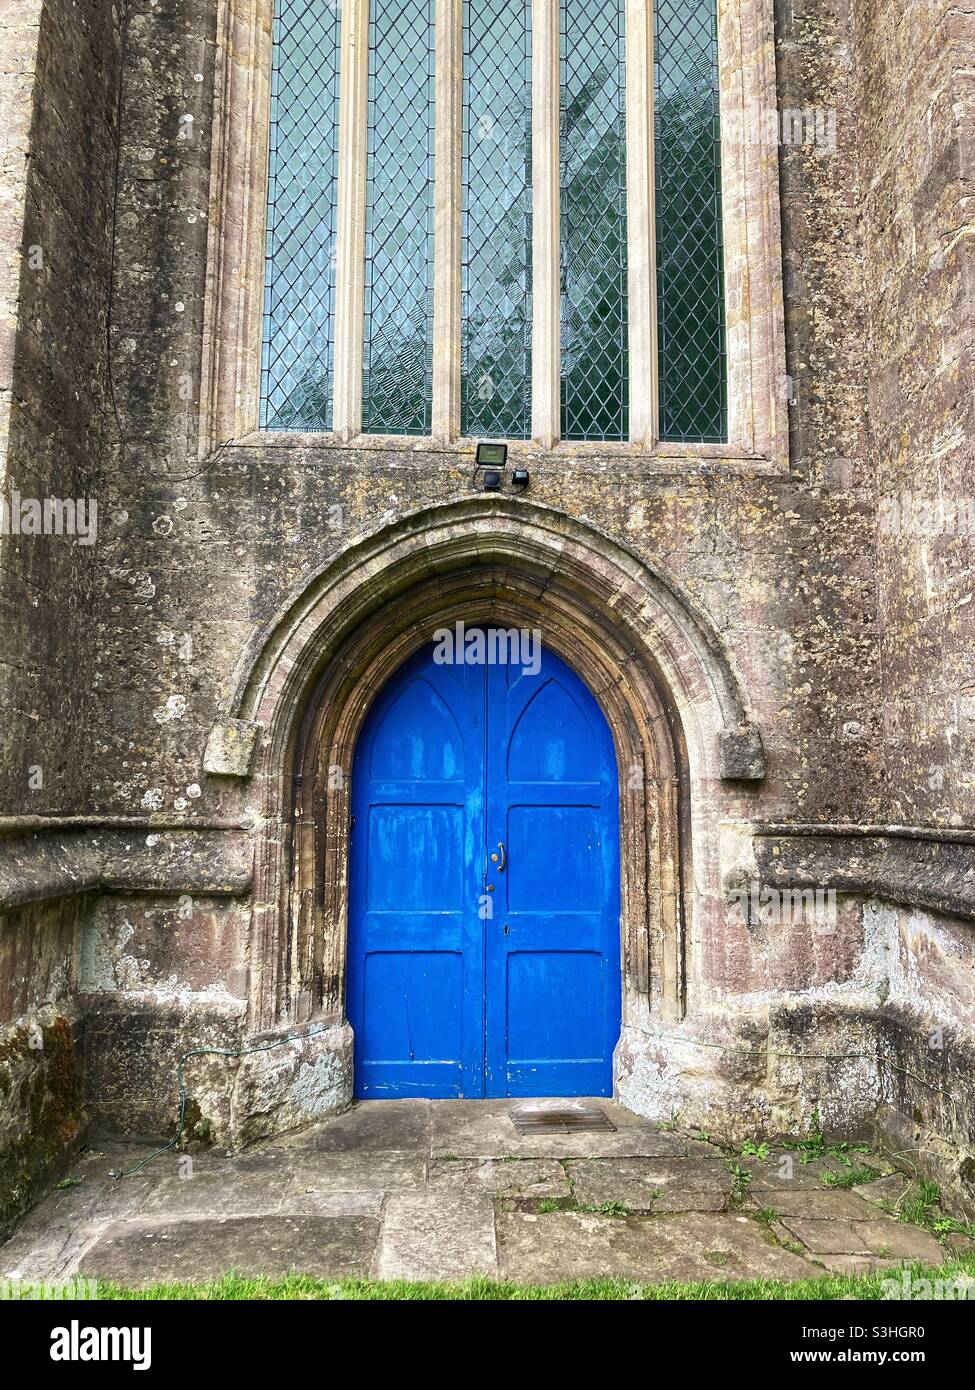 Chew magna church - blue door - st Michael’s church - North Somerset- church window Stock Photo